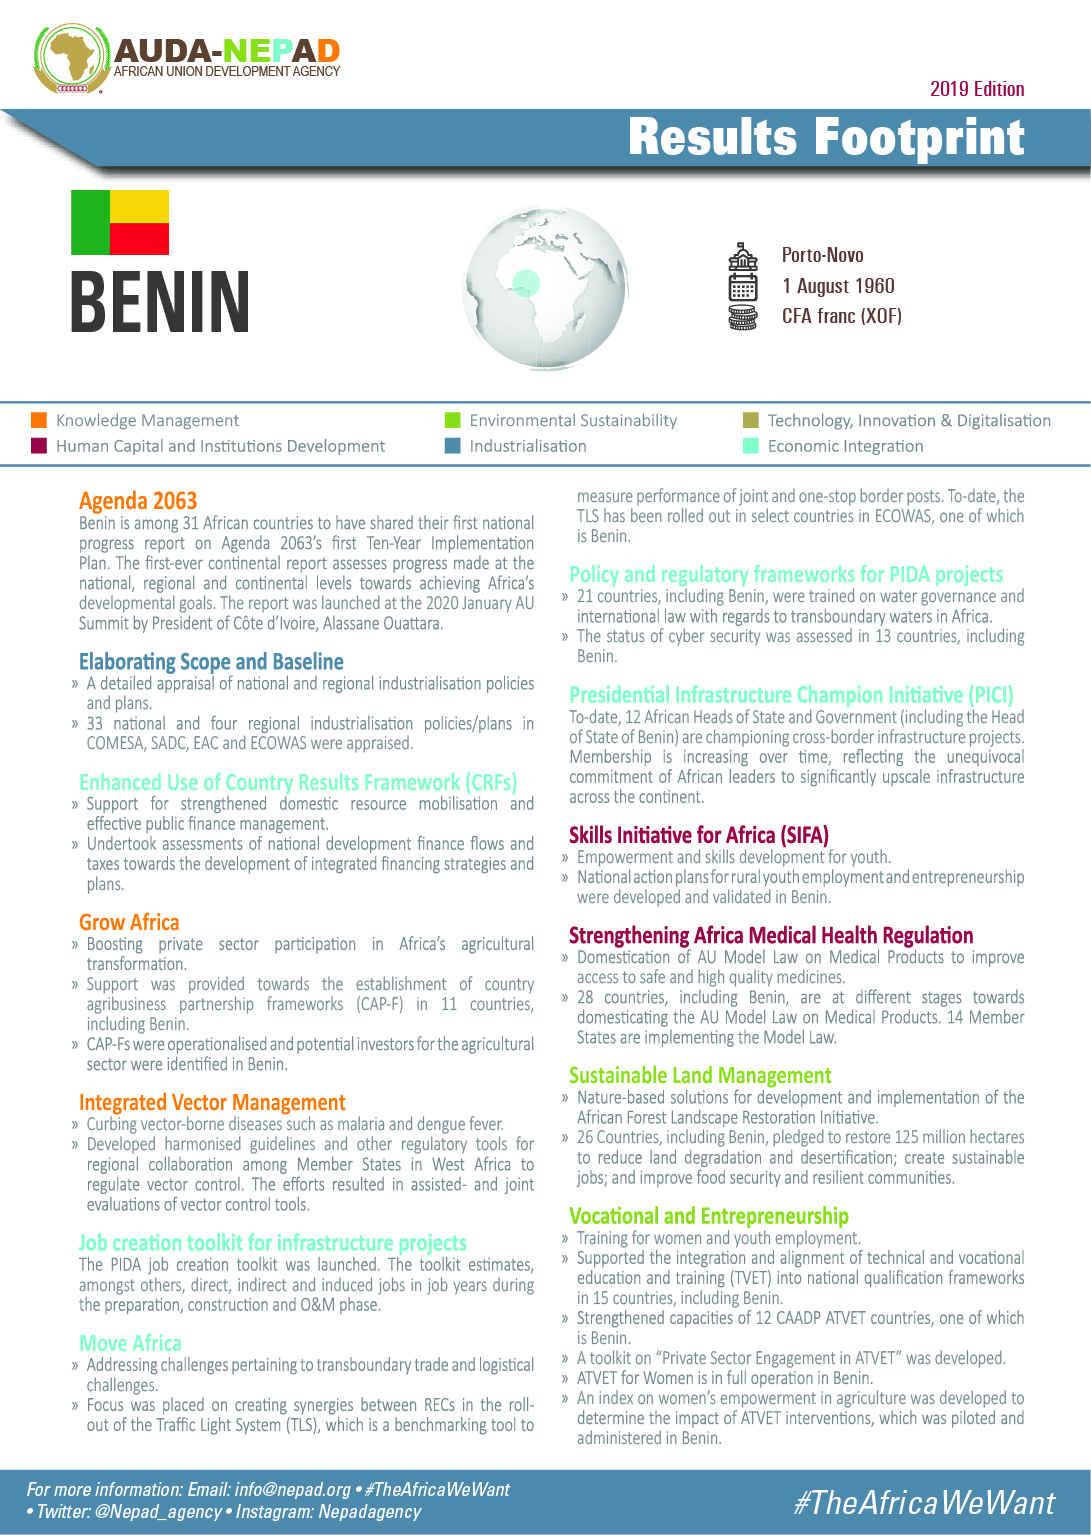 2019 AUDA-NEPAD Footprint: Country Profiles: Benin